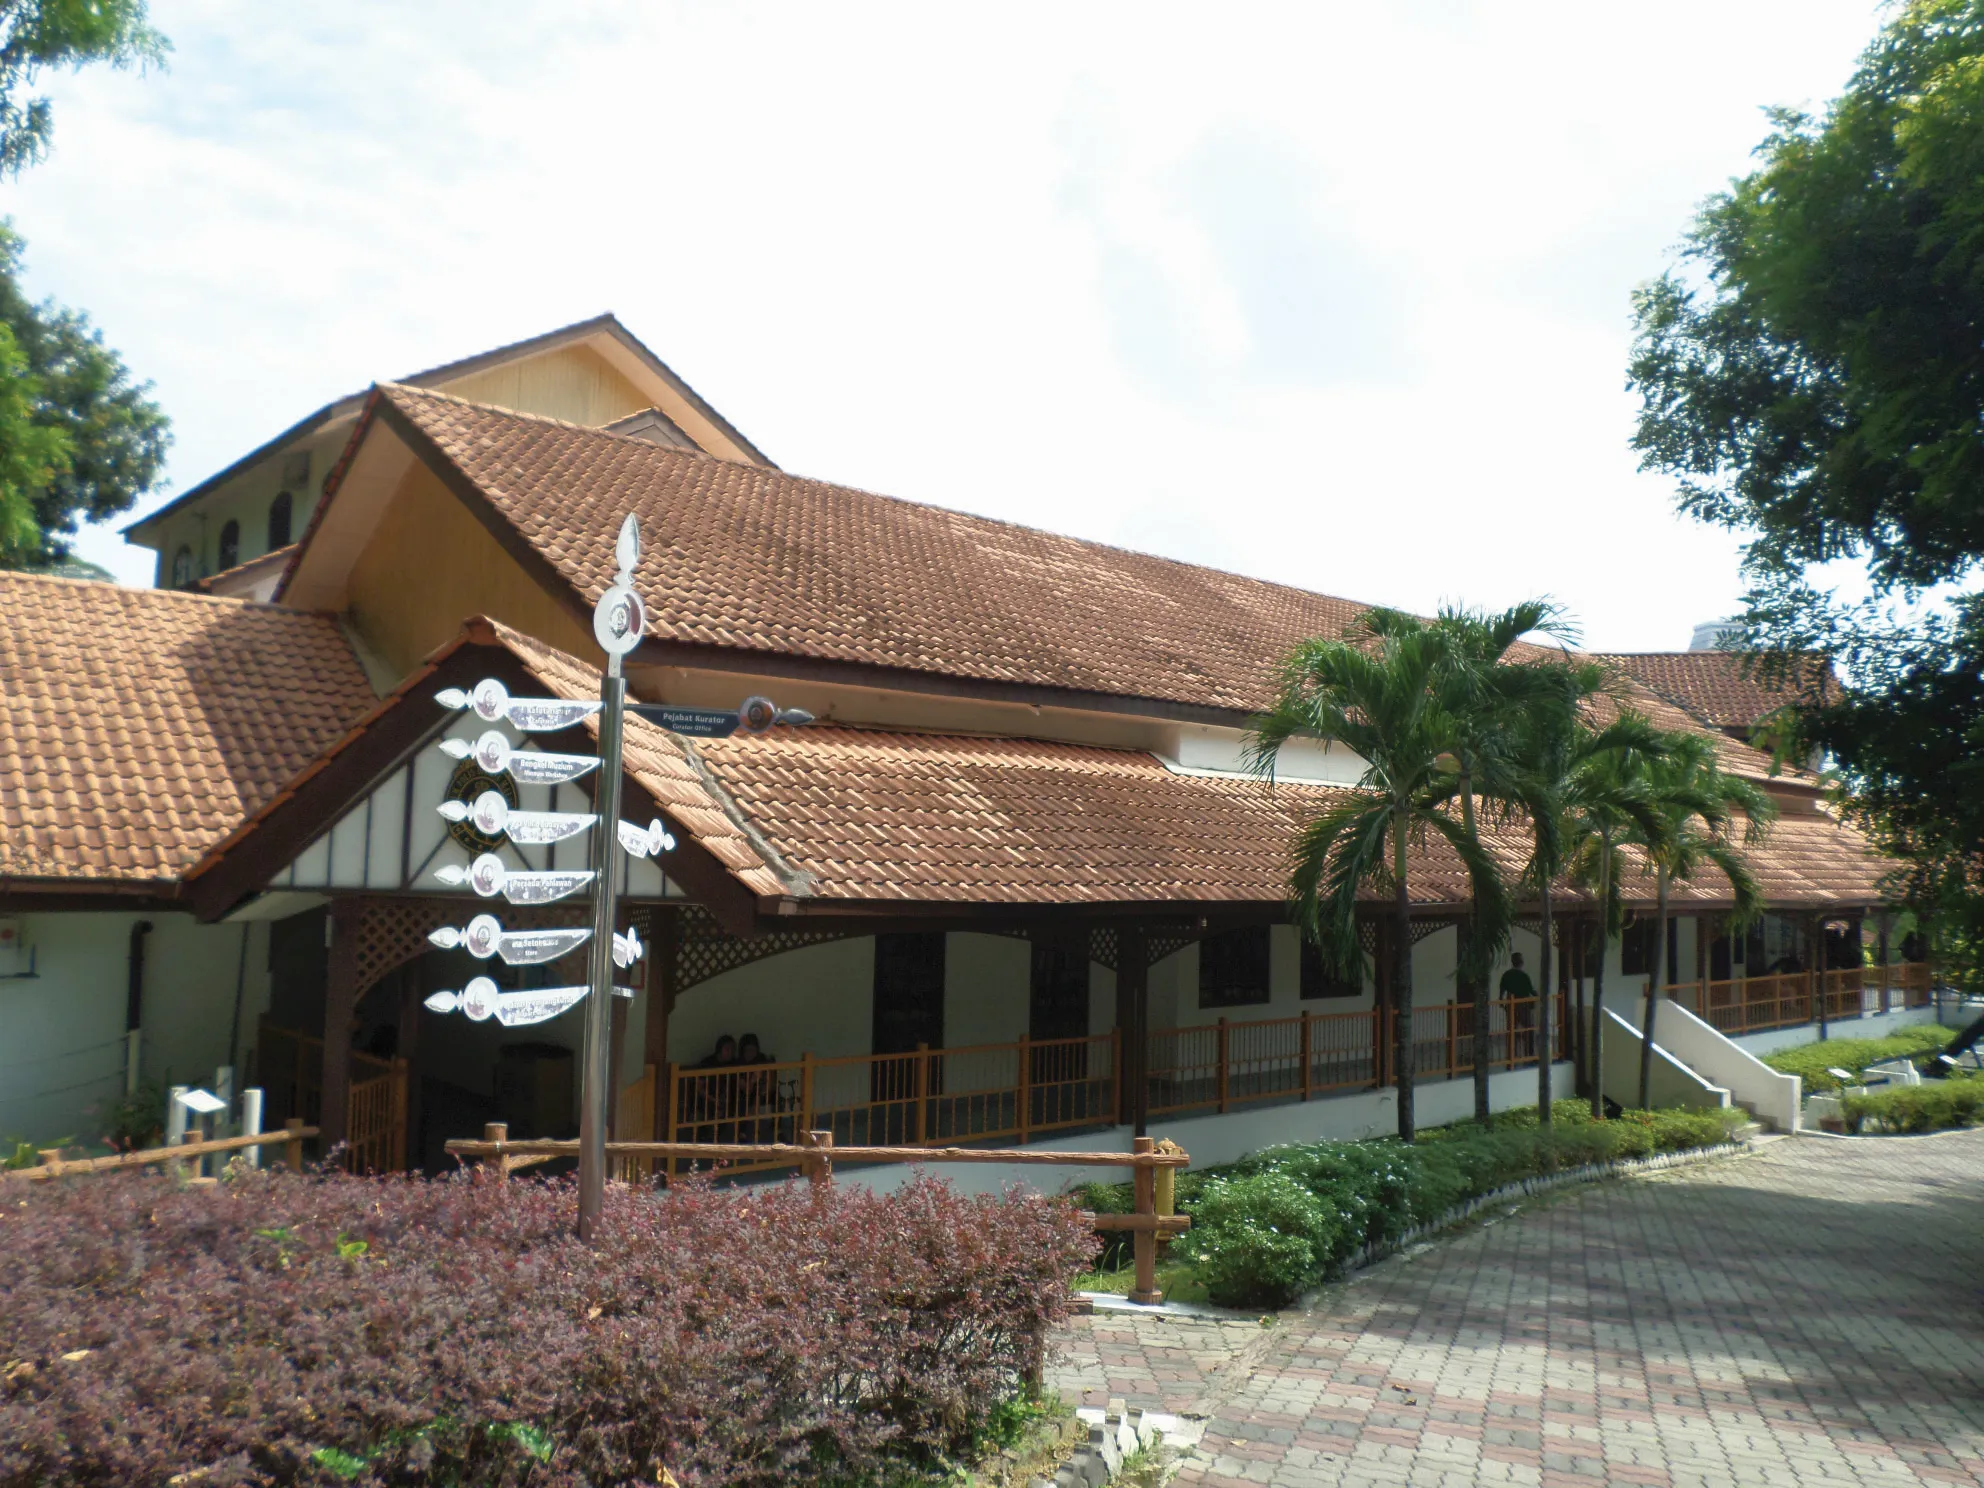 Royal Malaysia Police Museum
